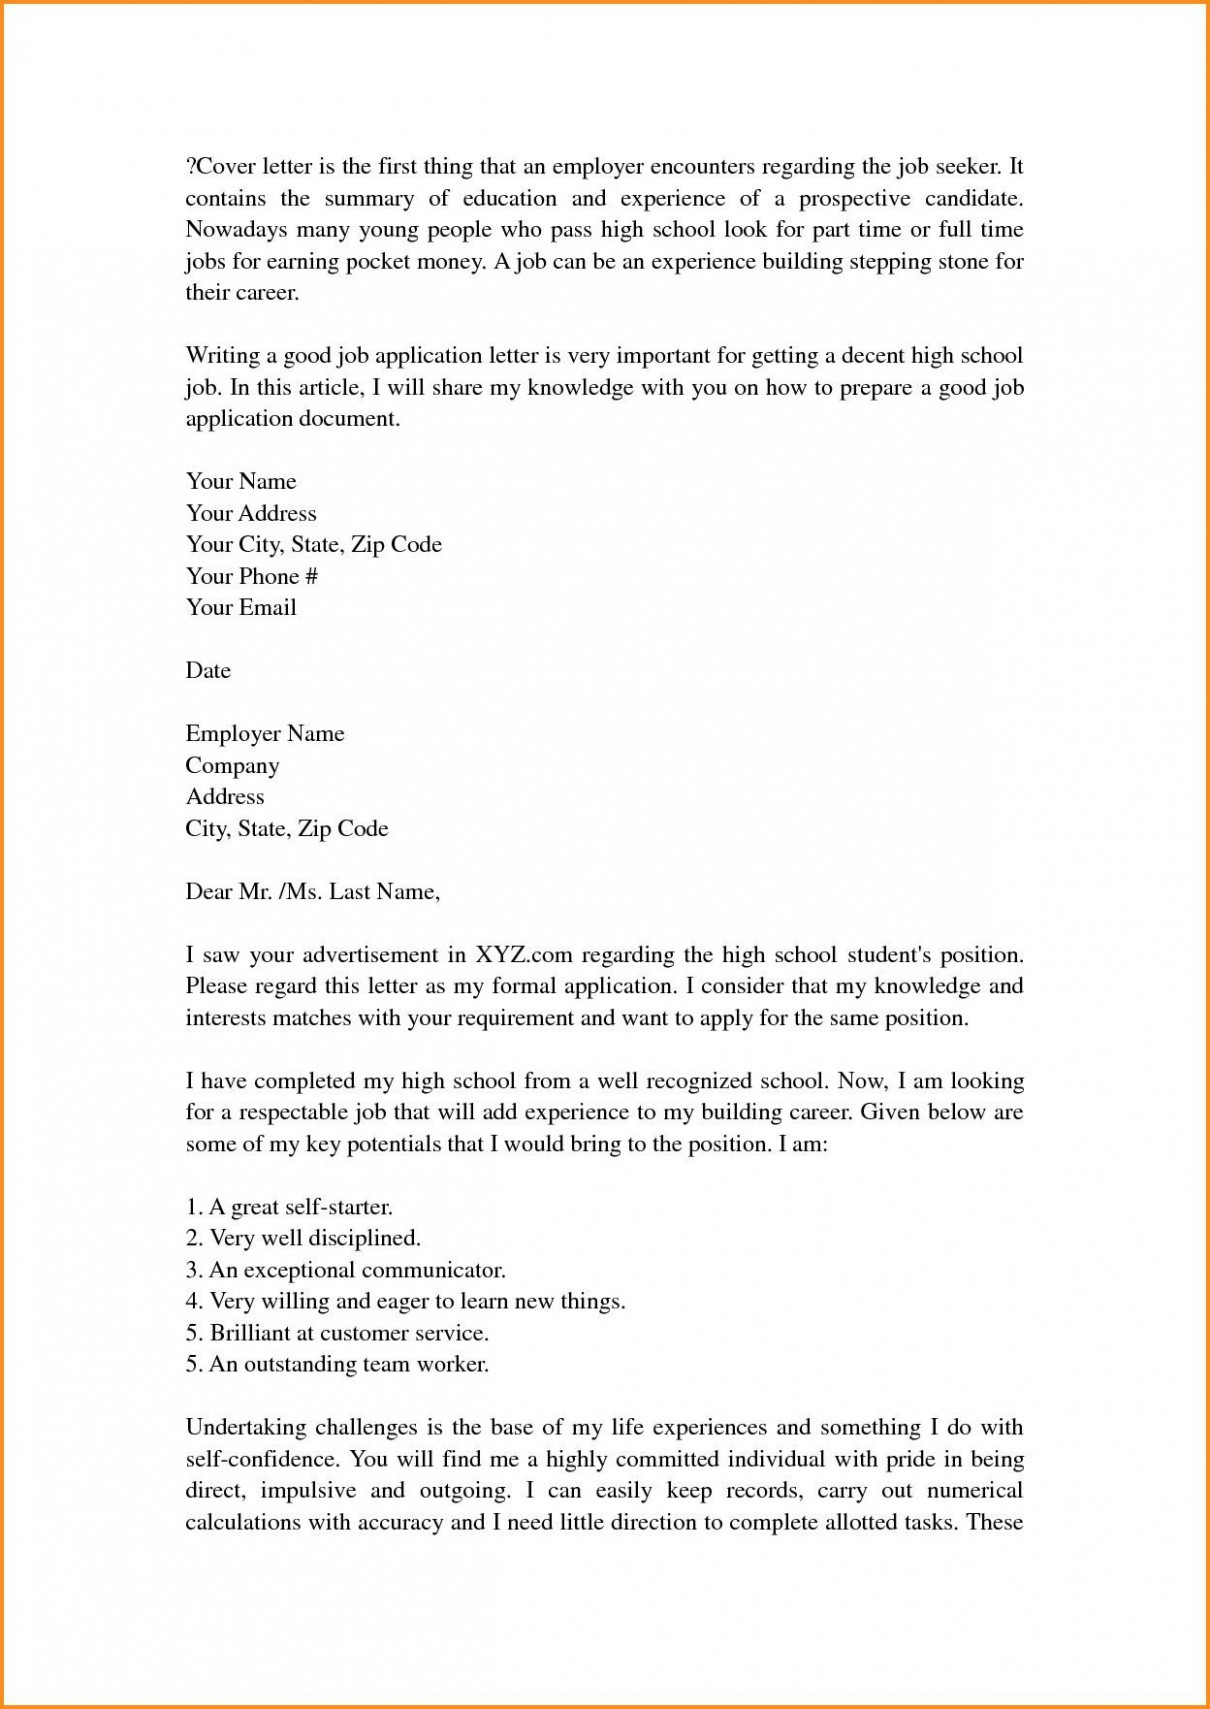 Sample Cover Letter for Resume for High School Student Cover Letter Template High School Understanding the